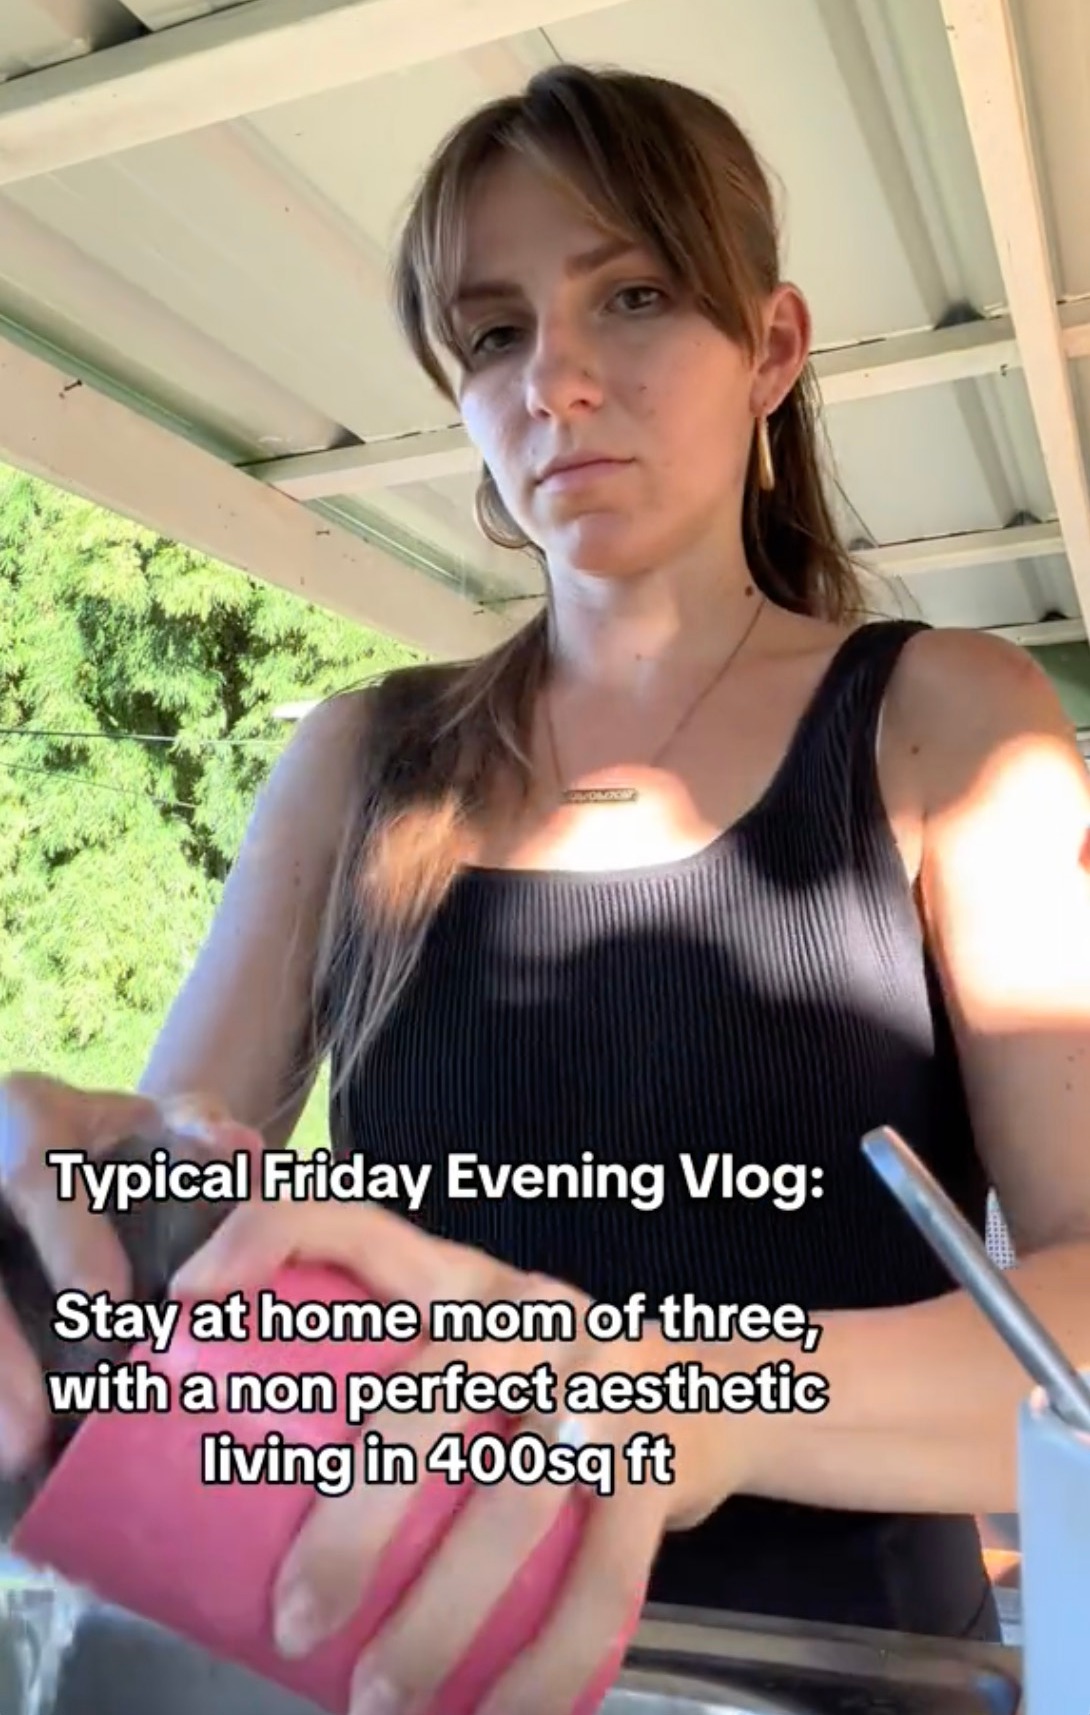 TikTok user Juli showed her followers around her 400-square-foot home in Hawaii